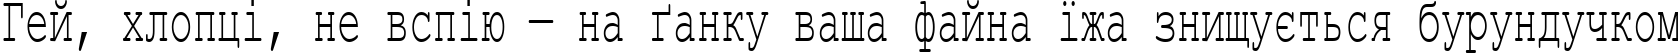 Пример написания шрифтом Courier New Cyr60n текста на украинском